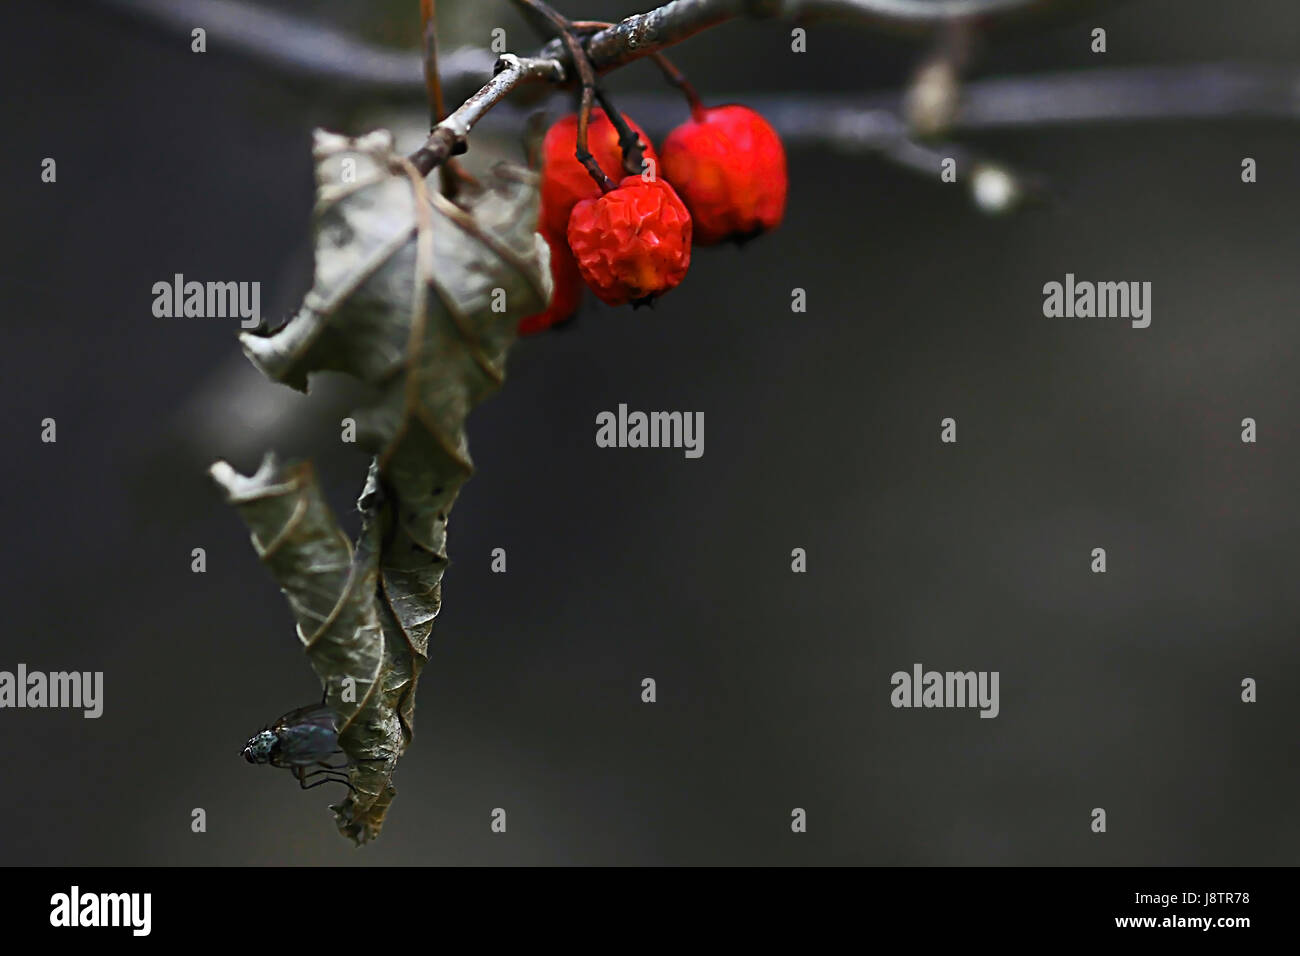 Foglia, die, rowan berry, Berry, rowan, autunno autunno, attendere, in attesa, leaf, arte, Foto Stock